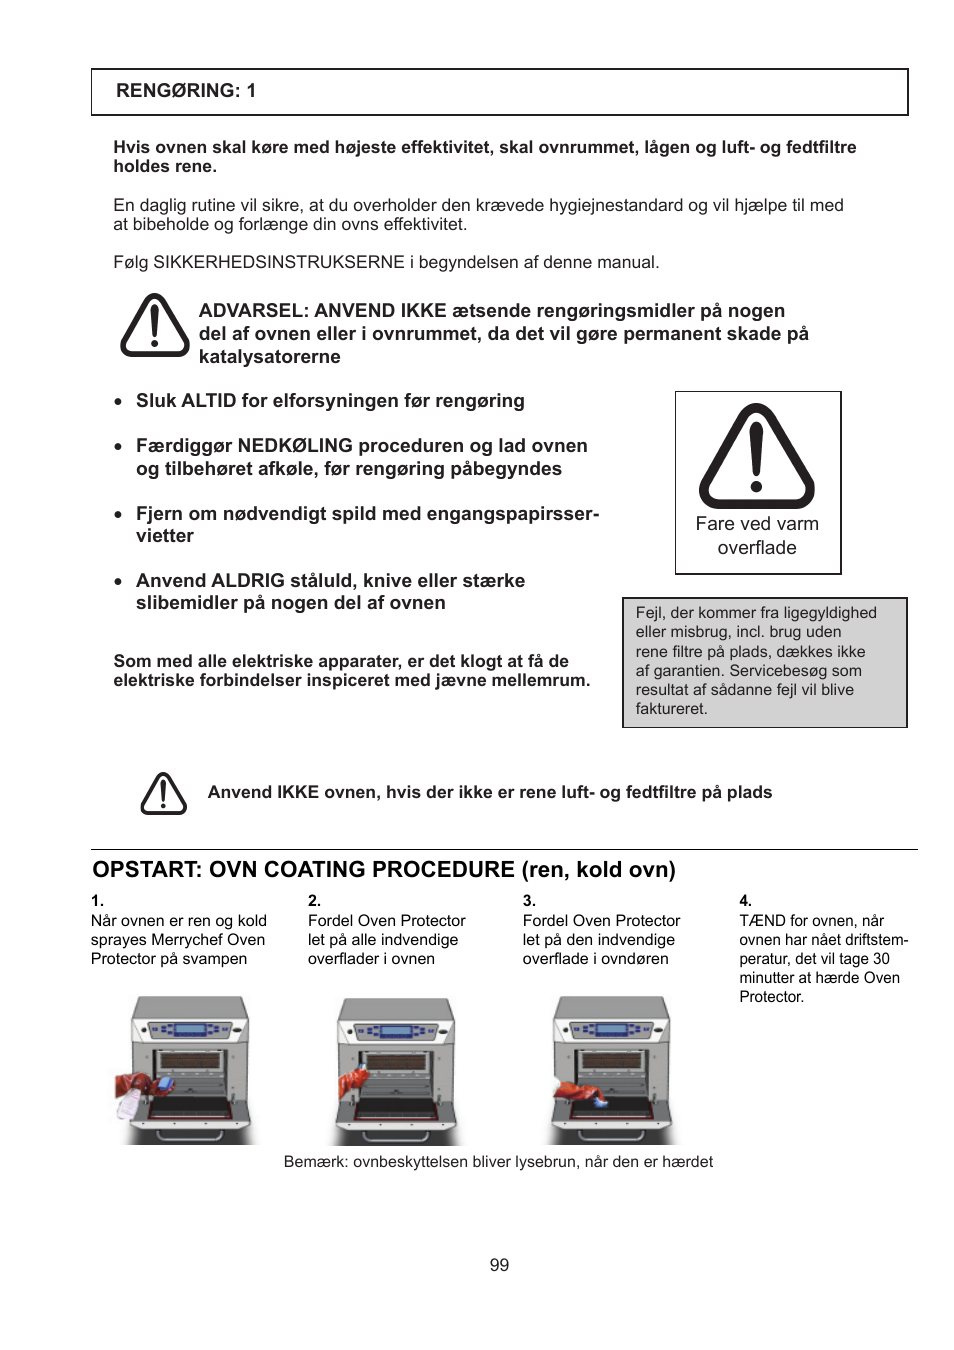 Opstart: ovn coating procedure (ren, kold ovn) | Merrychef 402s User Manual  | Page 99 / 142